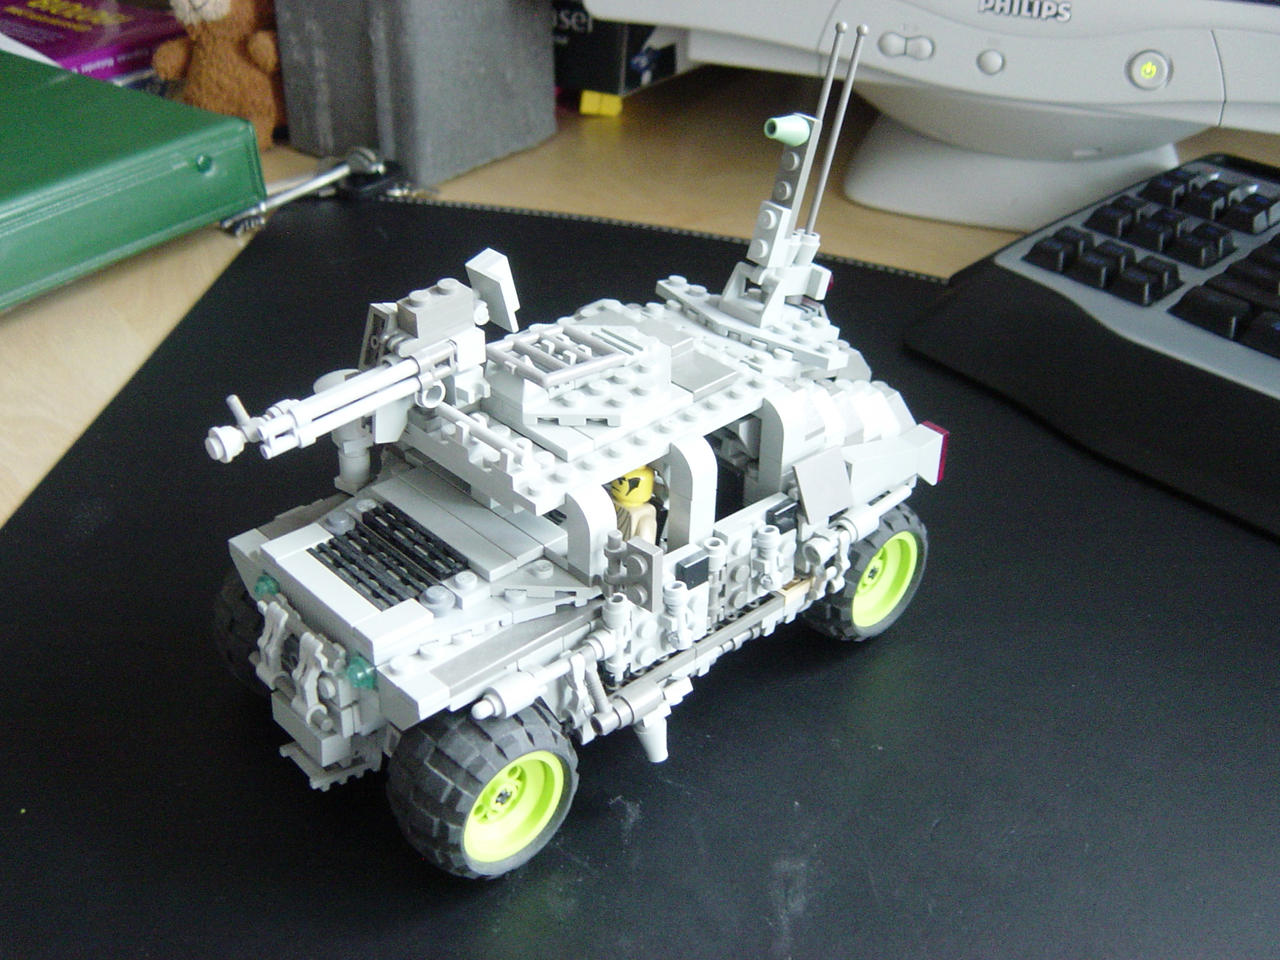 Lego Humvee